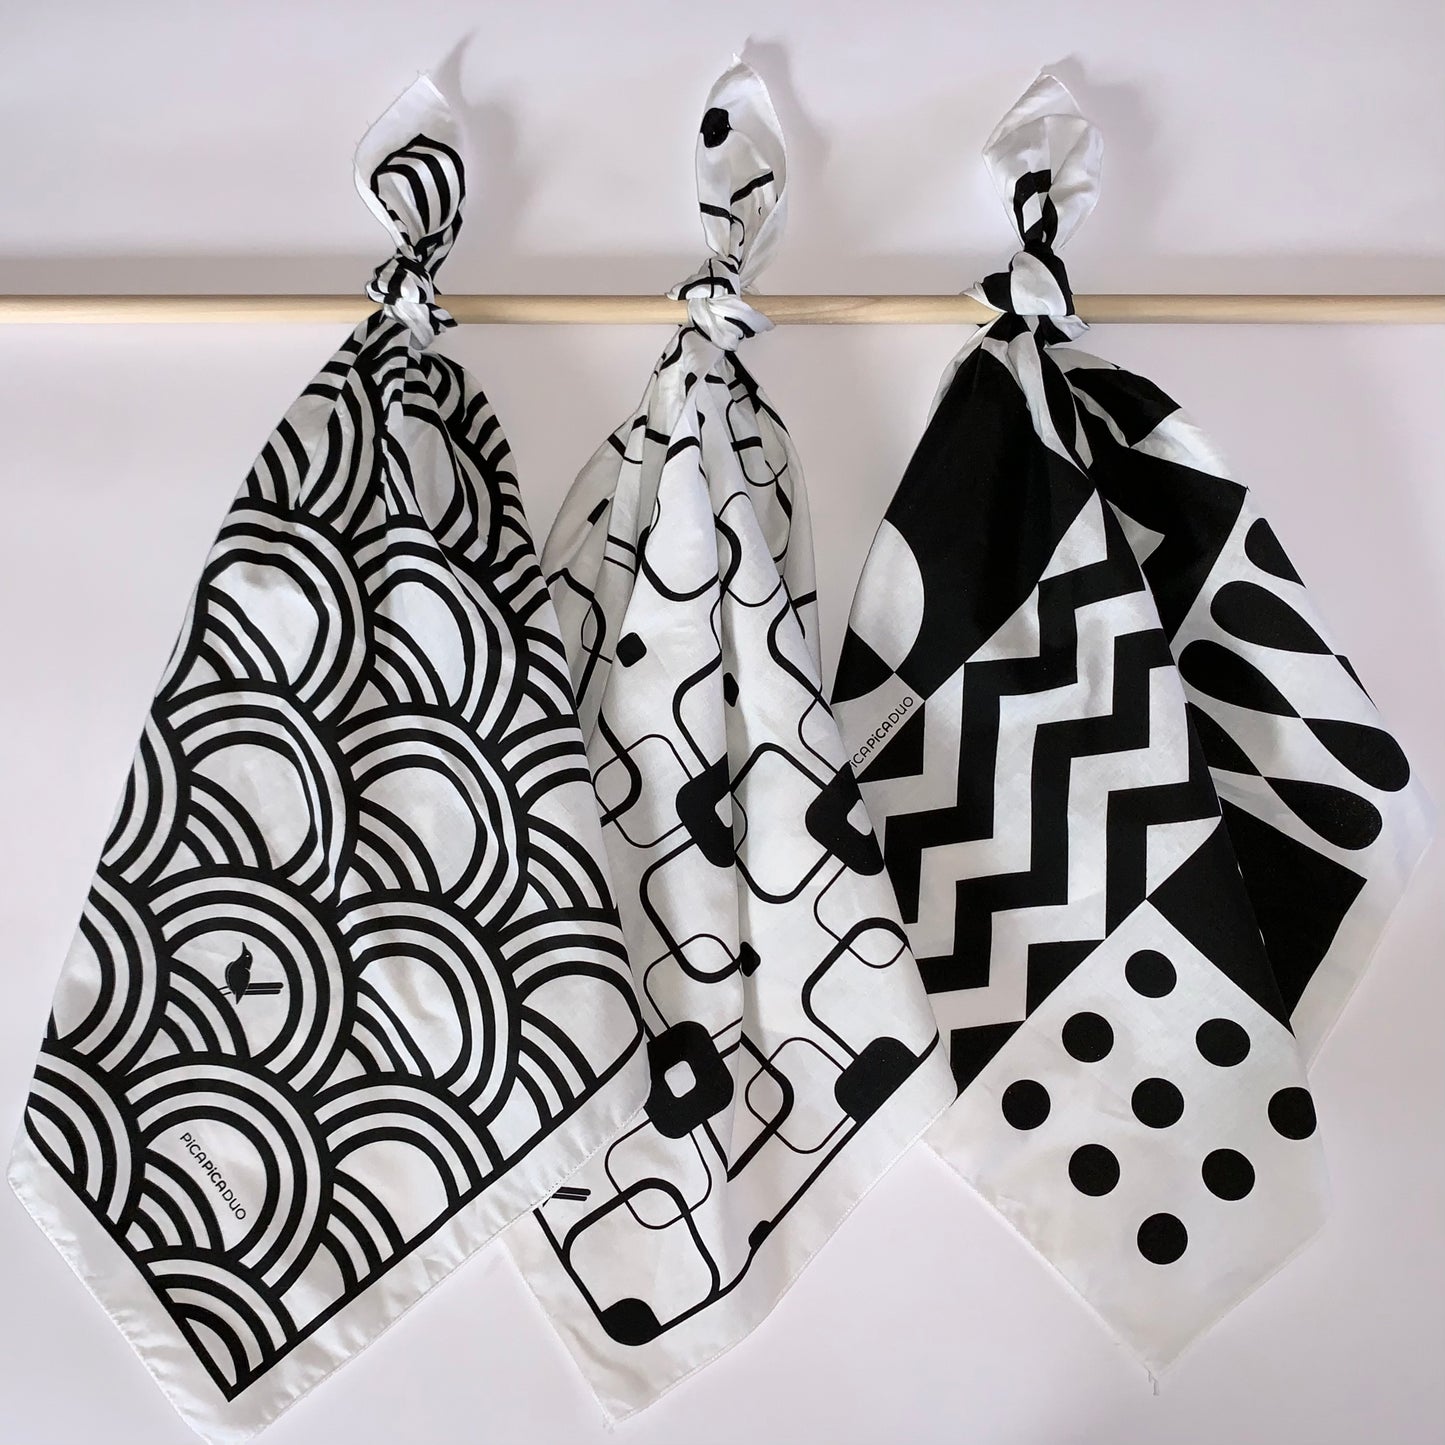 The Black & White series of bandanas.